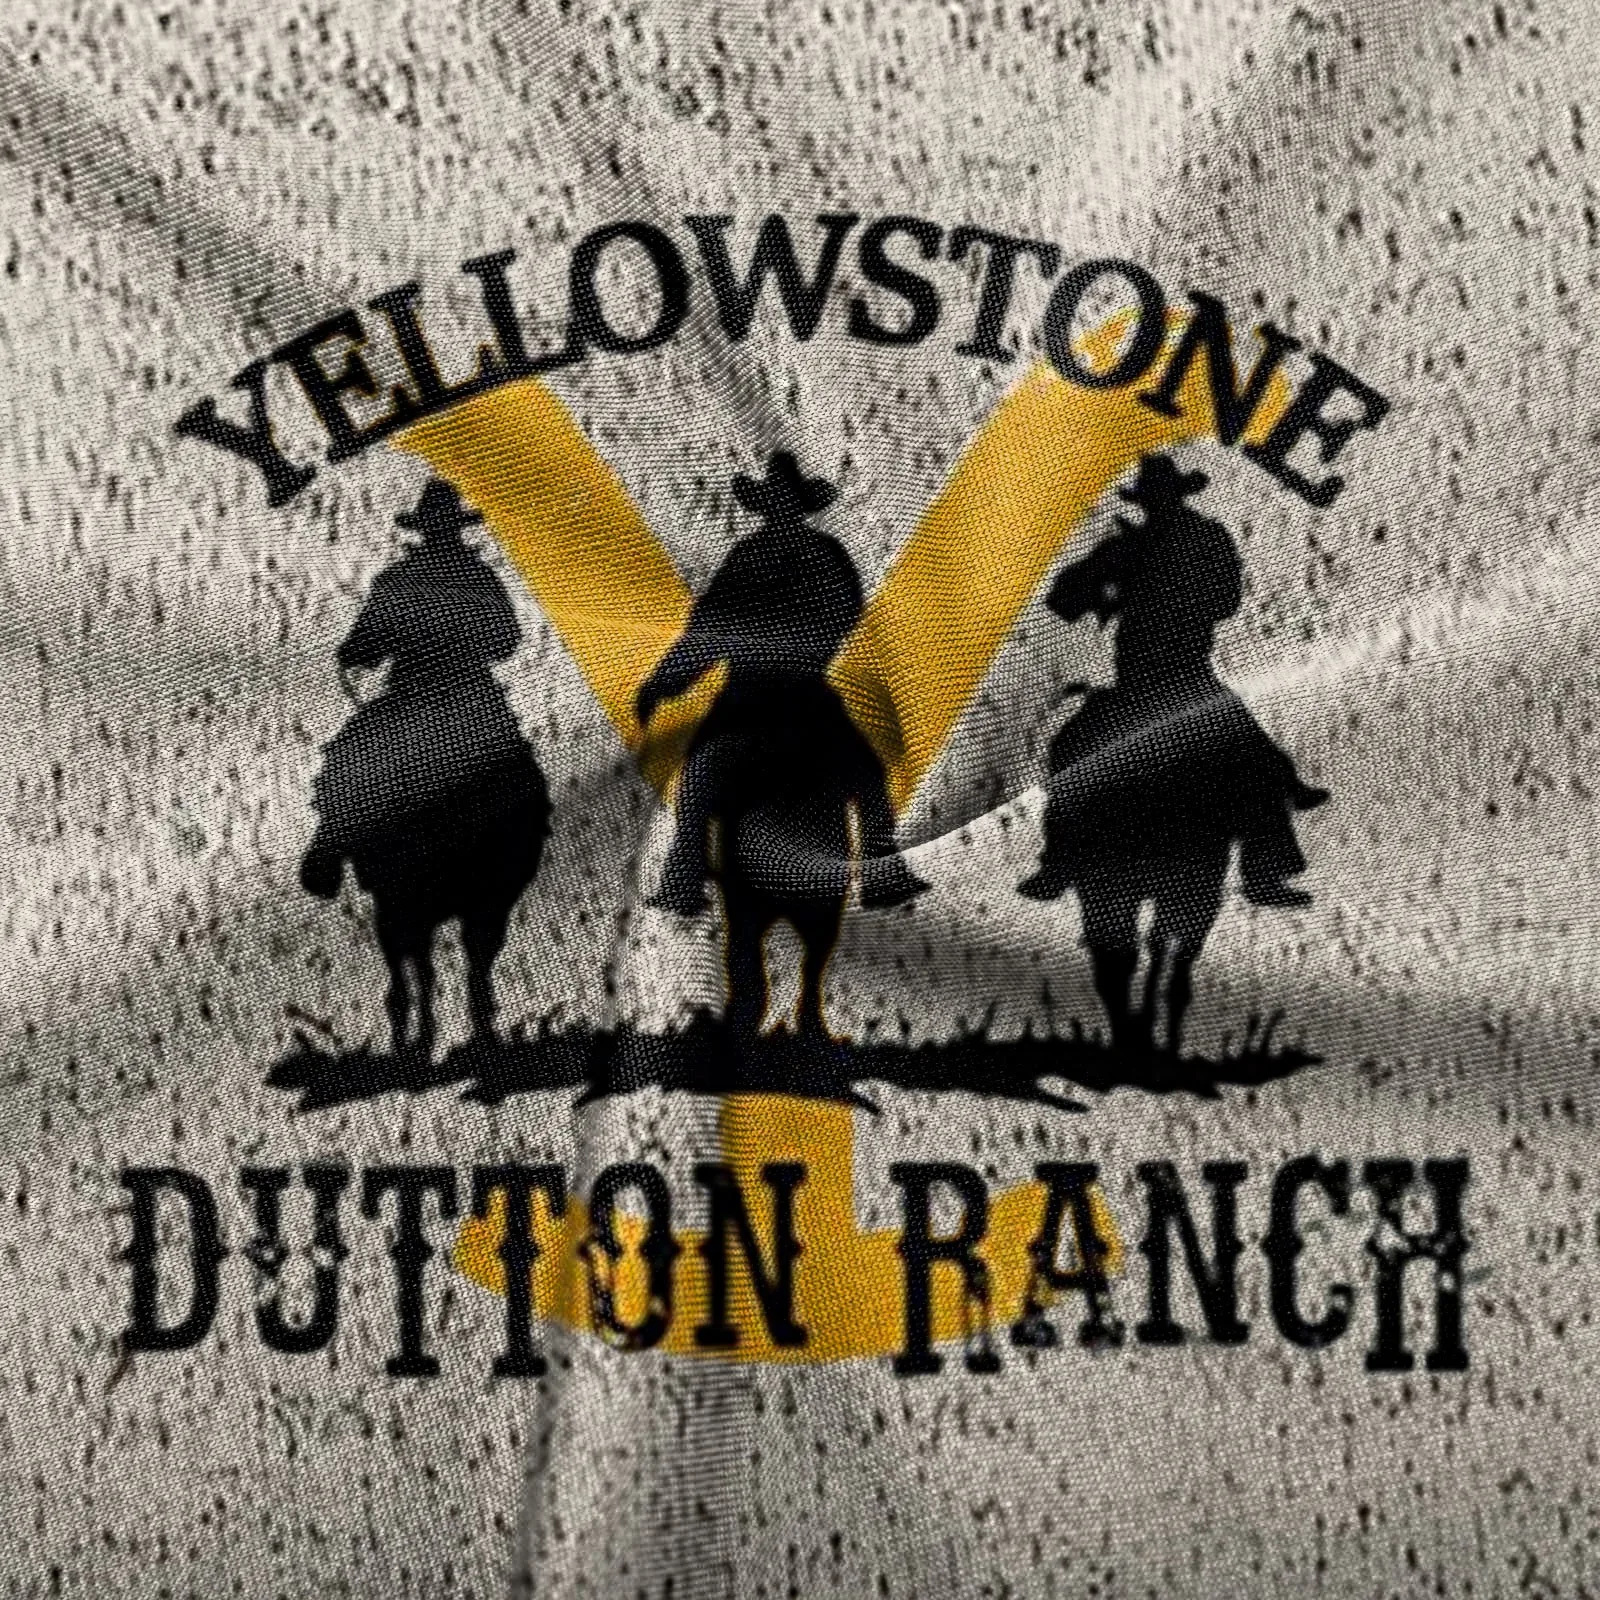 Yellowstone Dutton Ranch Yellowstone Relationships TV Bat Celebrity Hoodie Sweatshirts Women Yellowstone Park Printed Sweater long sleeve t shirts Tees